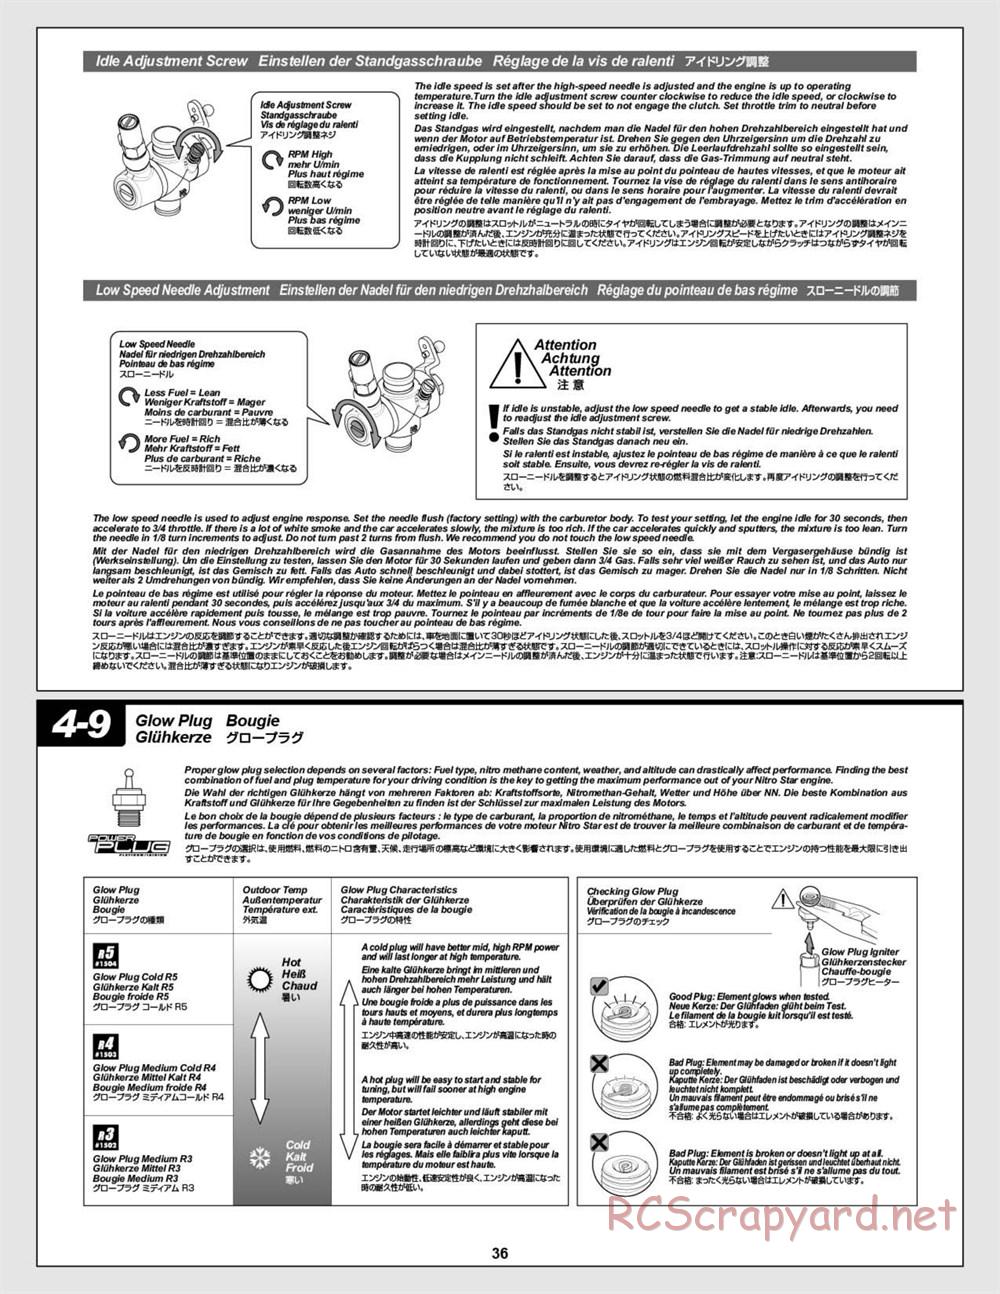 HPI - Firestorm 10T - Manual - Page 36